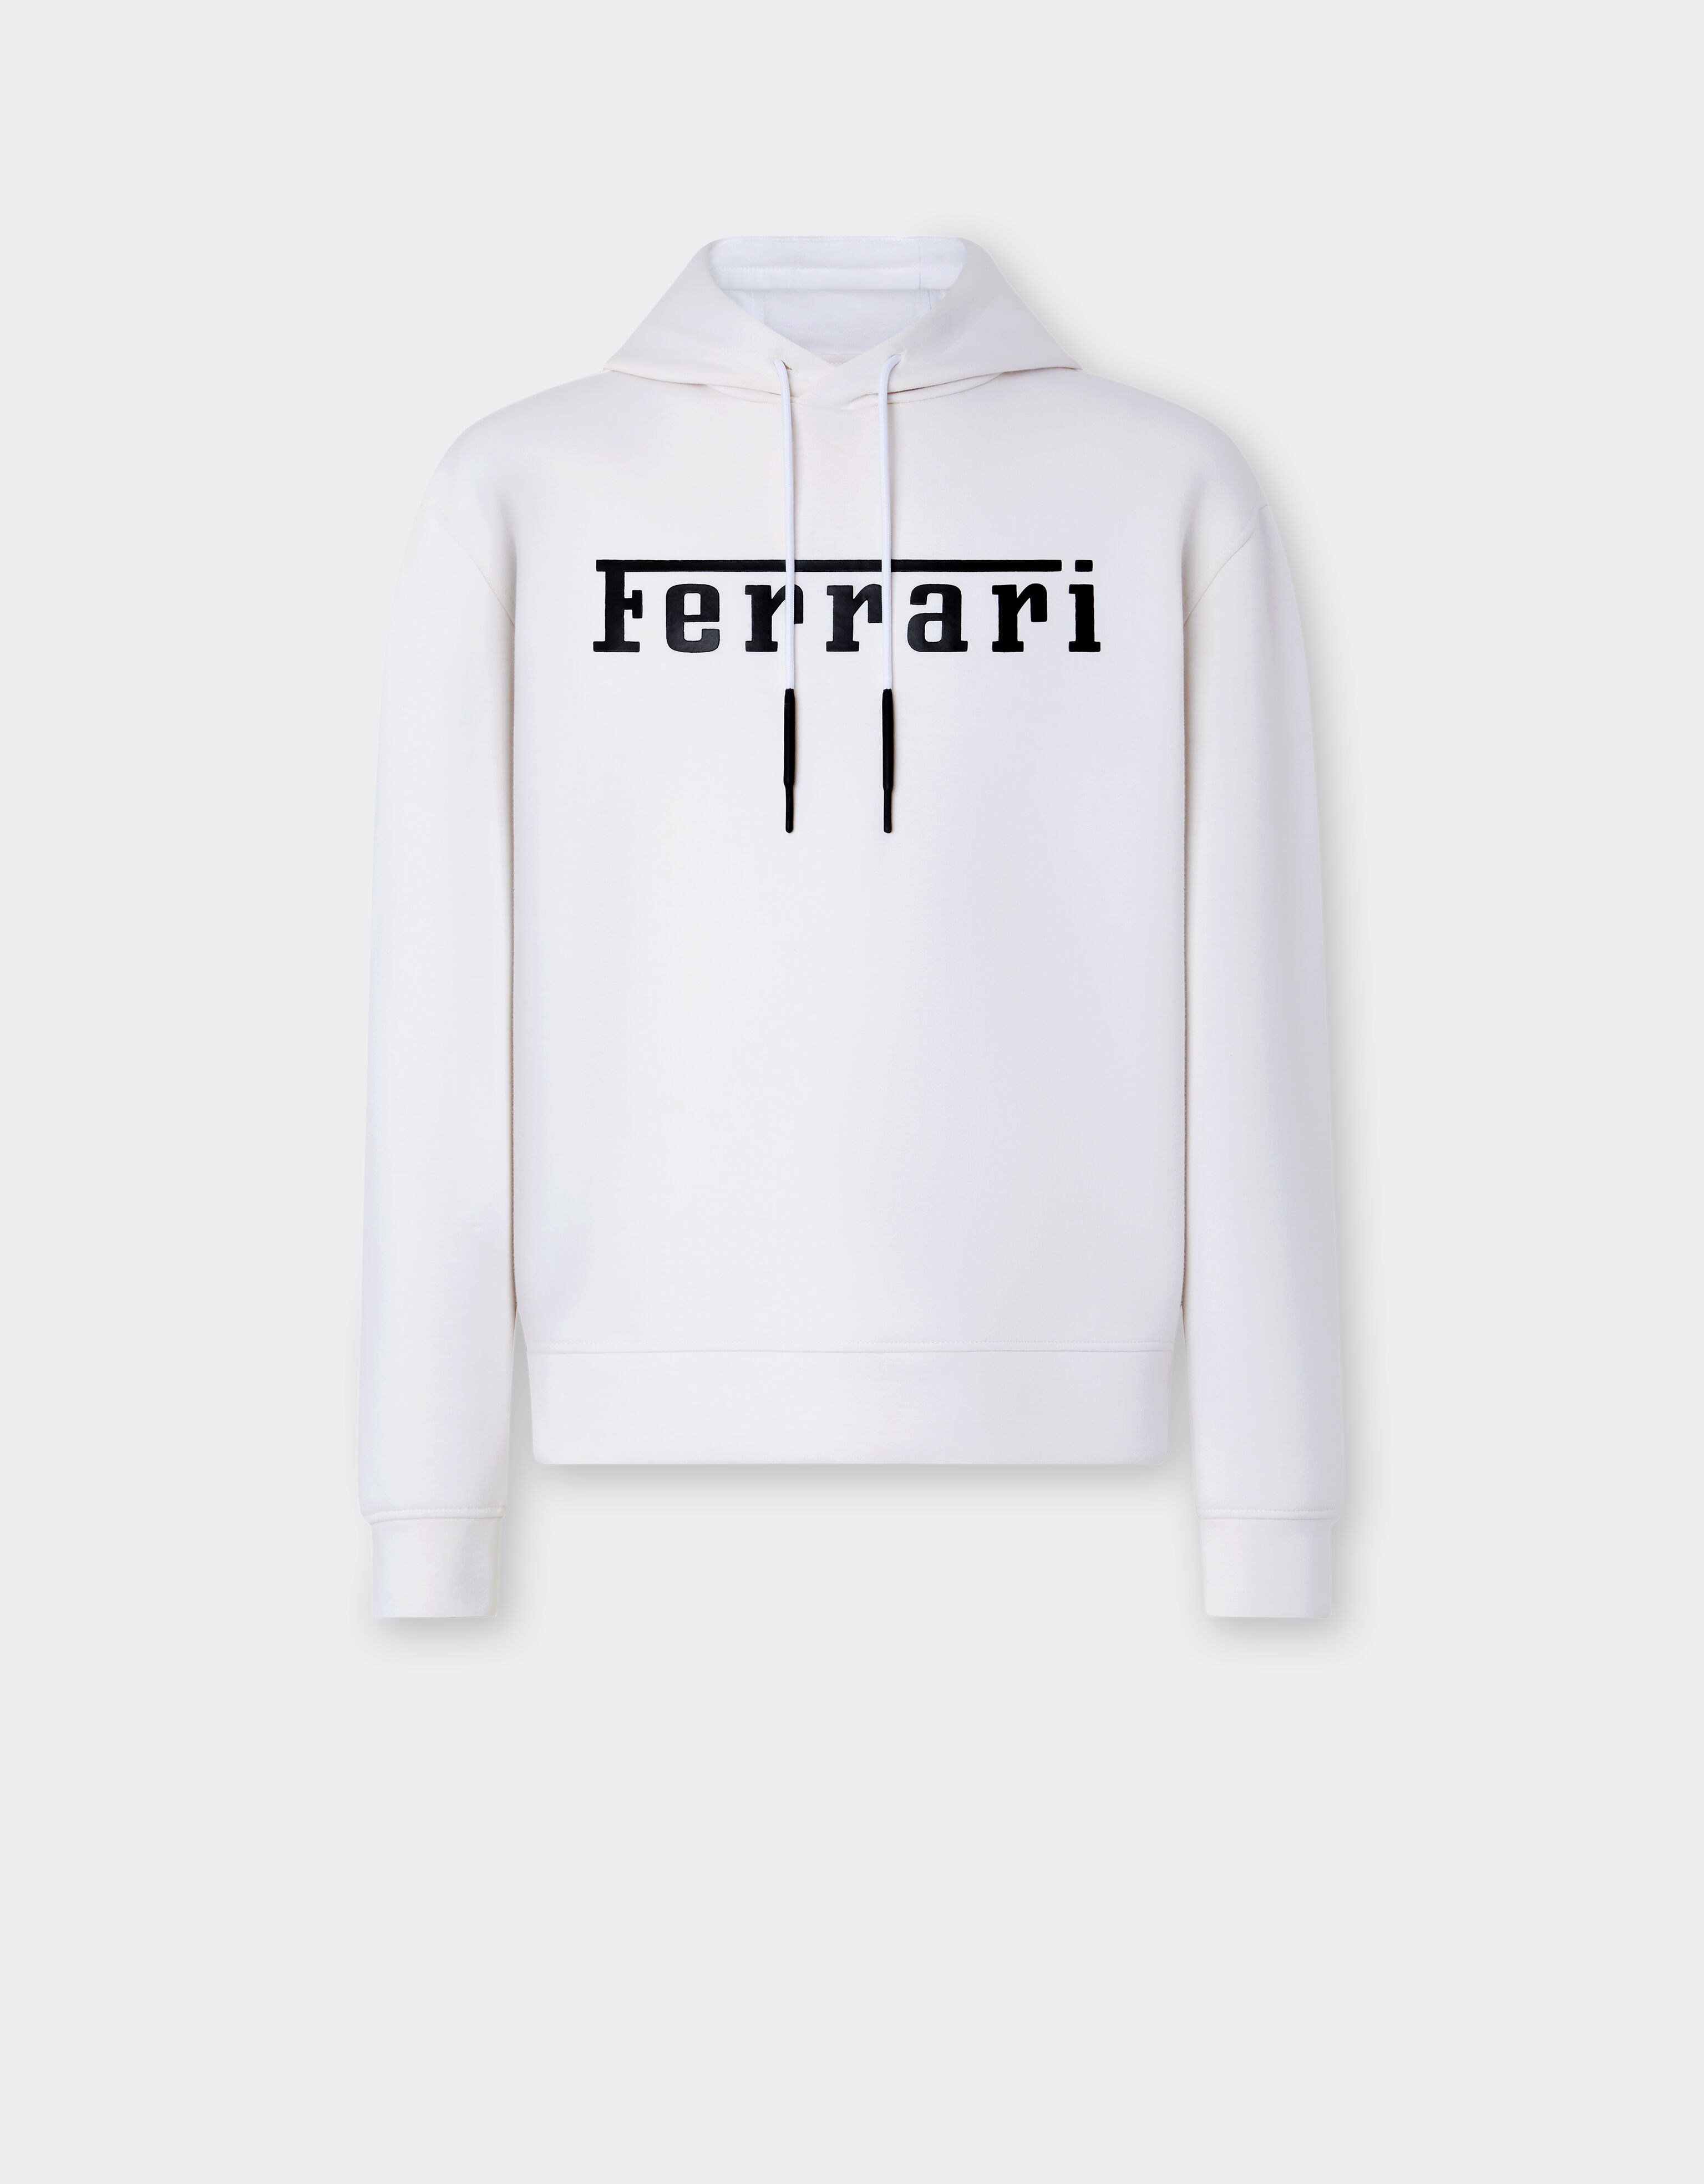 Ferrari Scuba knit sweatshirt with contrast Ferrari logo Ingrid 20684f